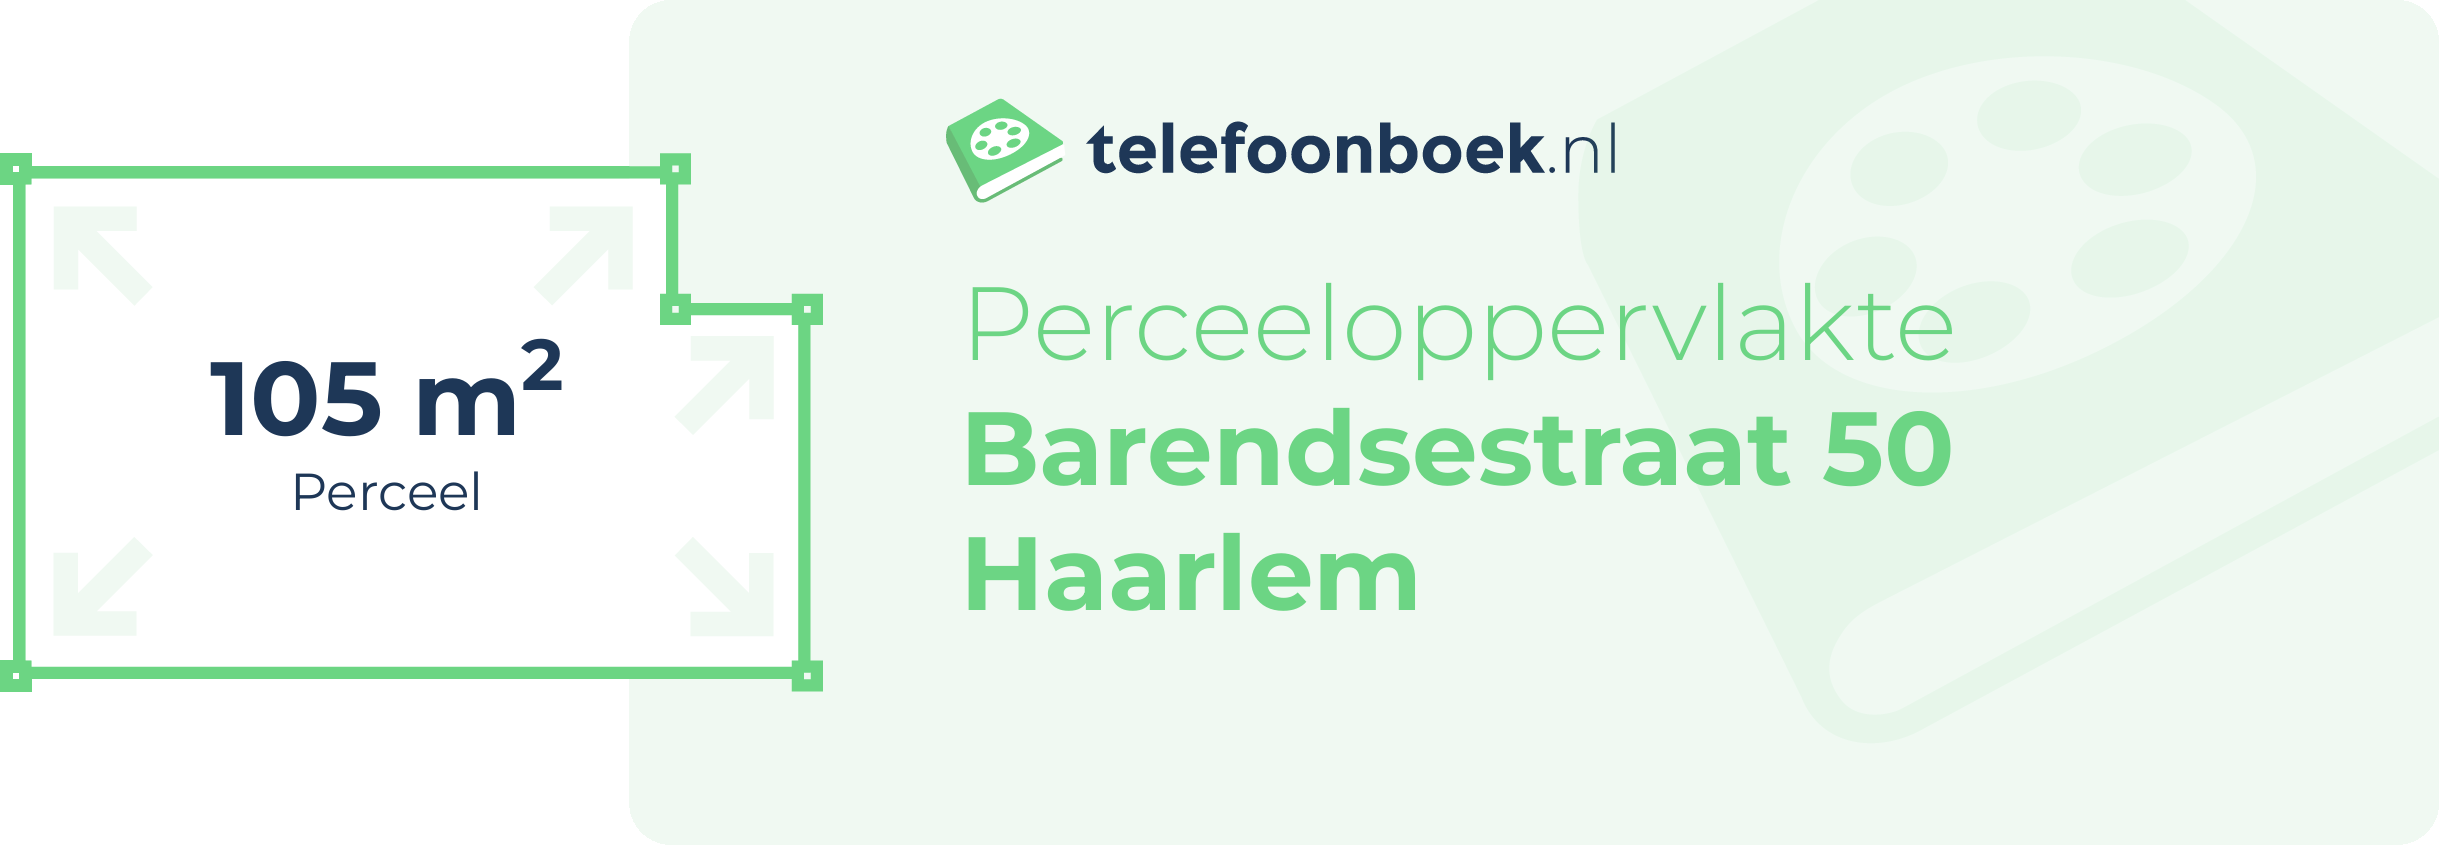 Perceeloppervlakte Barendsestraat 50 Haarlem